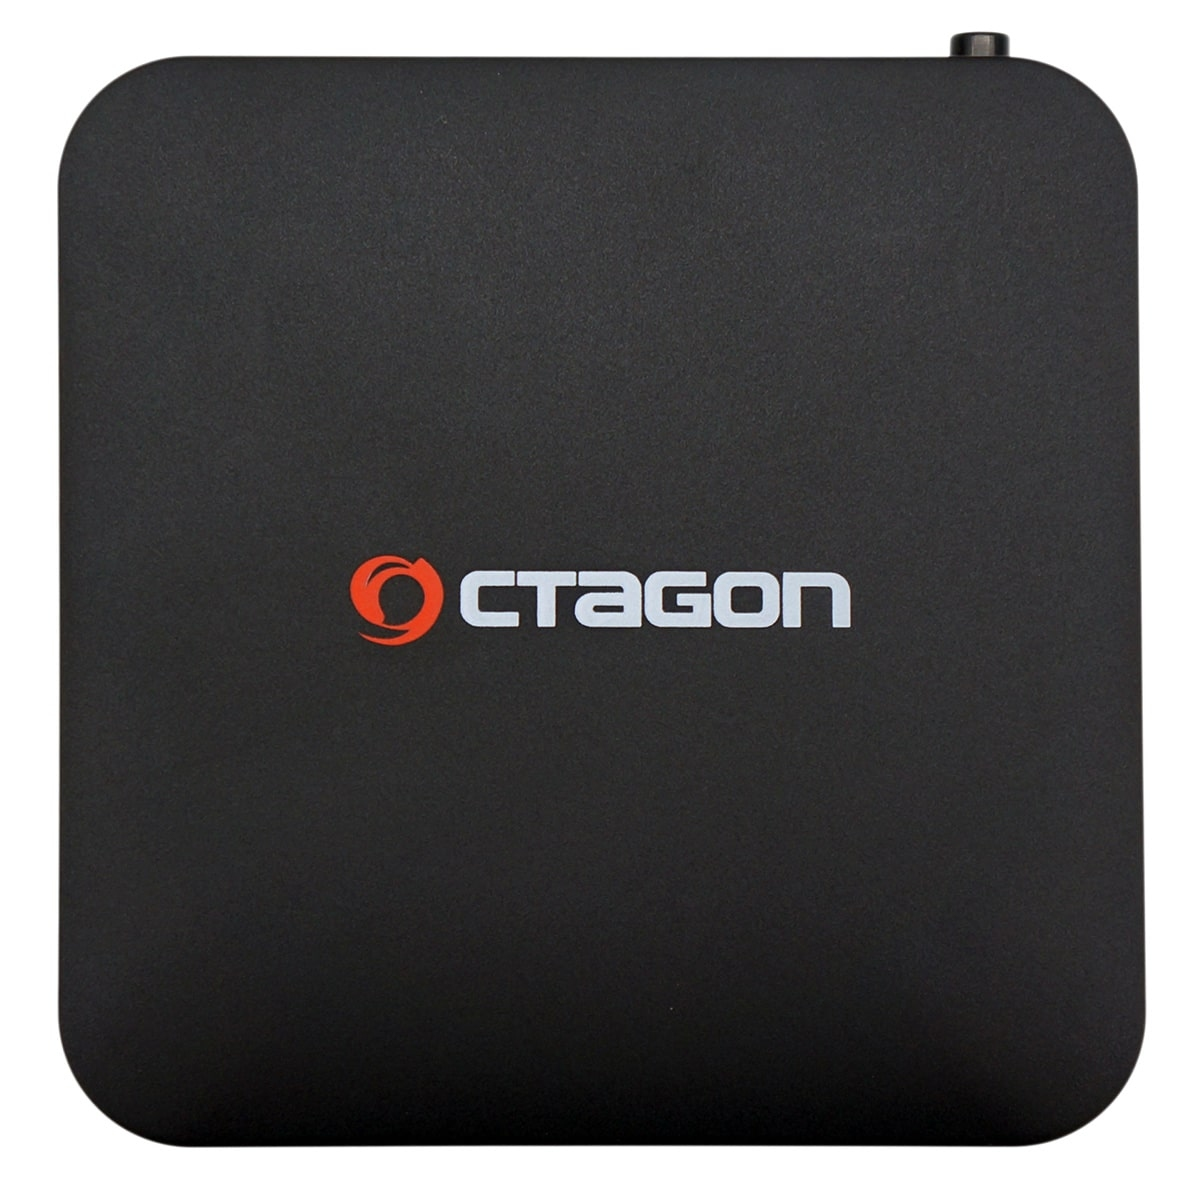 OCTAGON SX988 IP 600 Mbit/s 8 Wifi GB